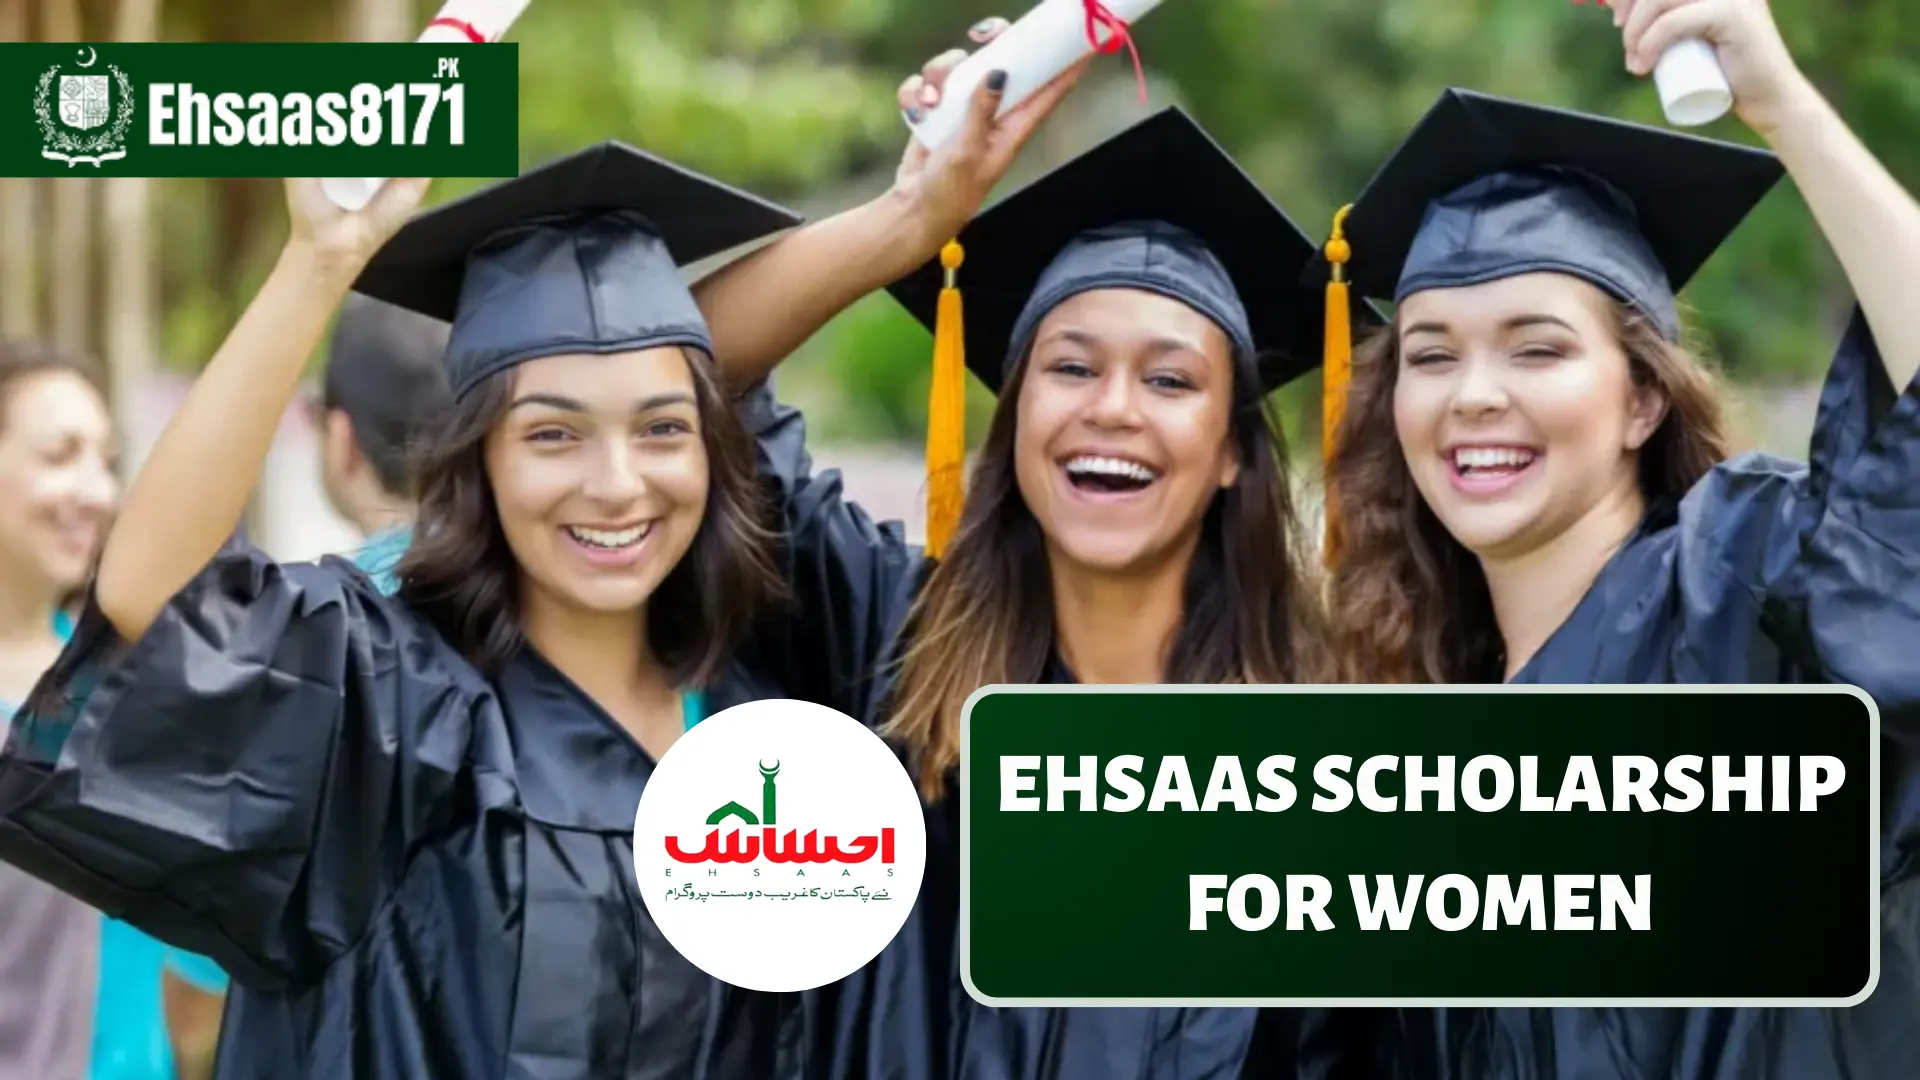 Ehsaas scholarship for women